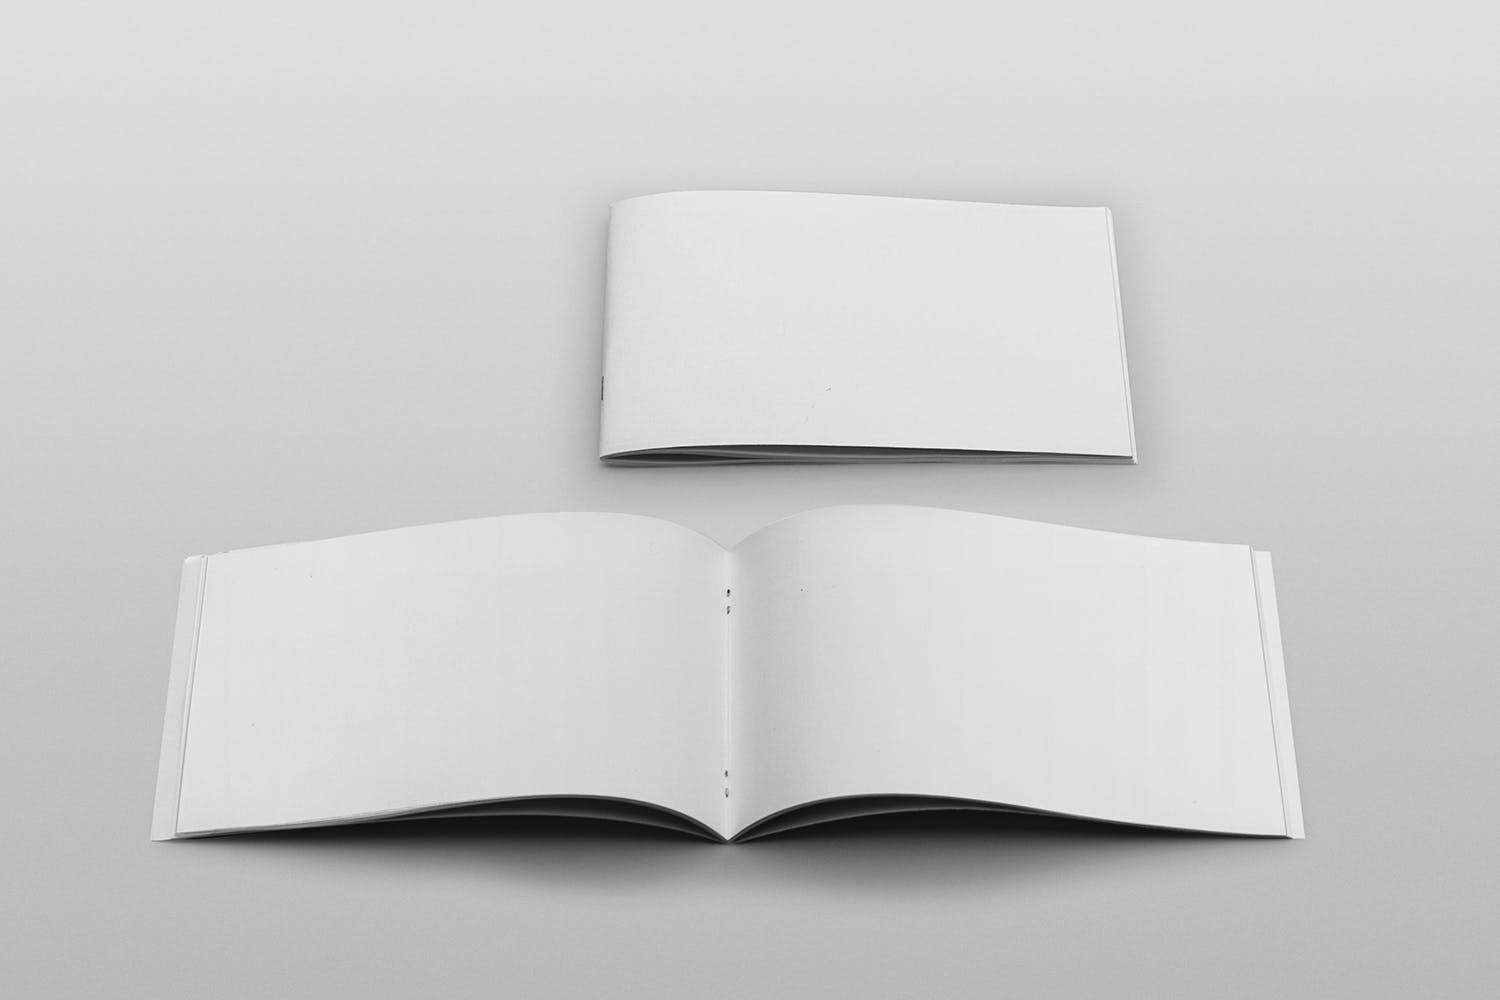 企业画册产品手册封面&内页版式设计正视图样机素材库精选 Cover & Open Landscape Brochure Mockup Front View插图(1)